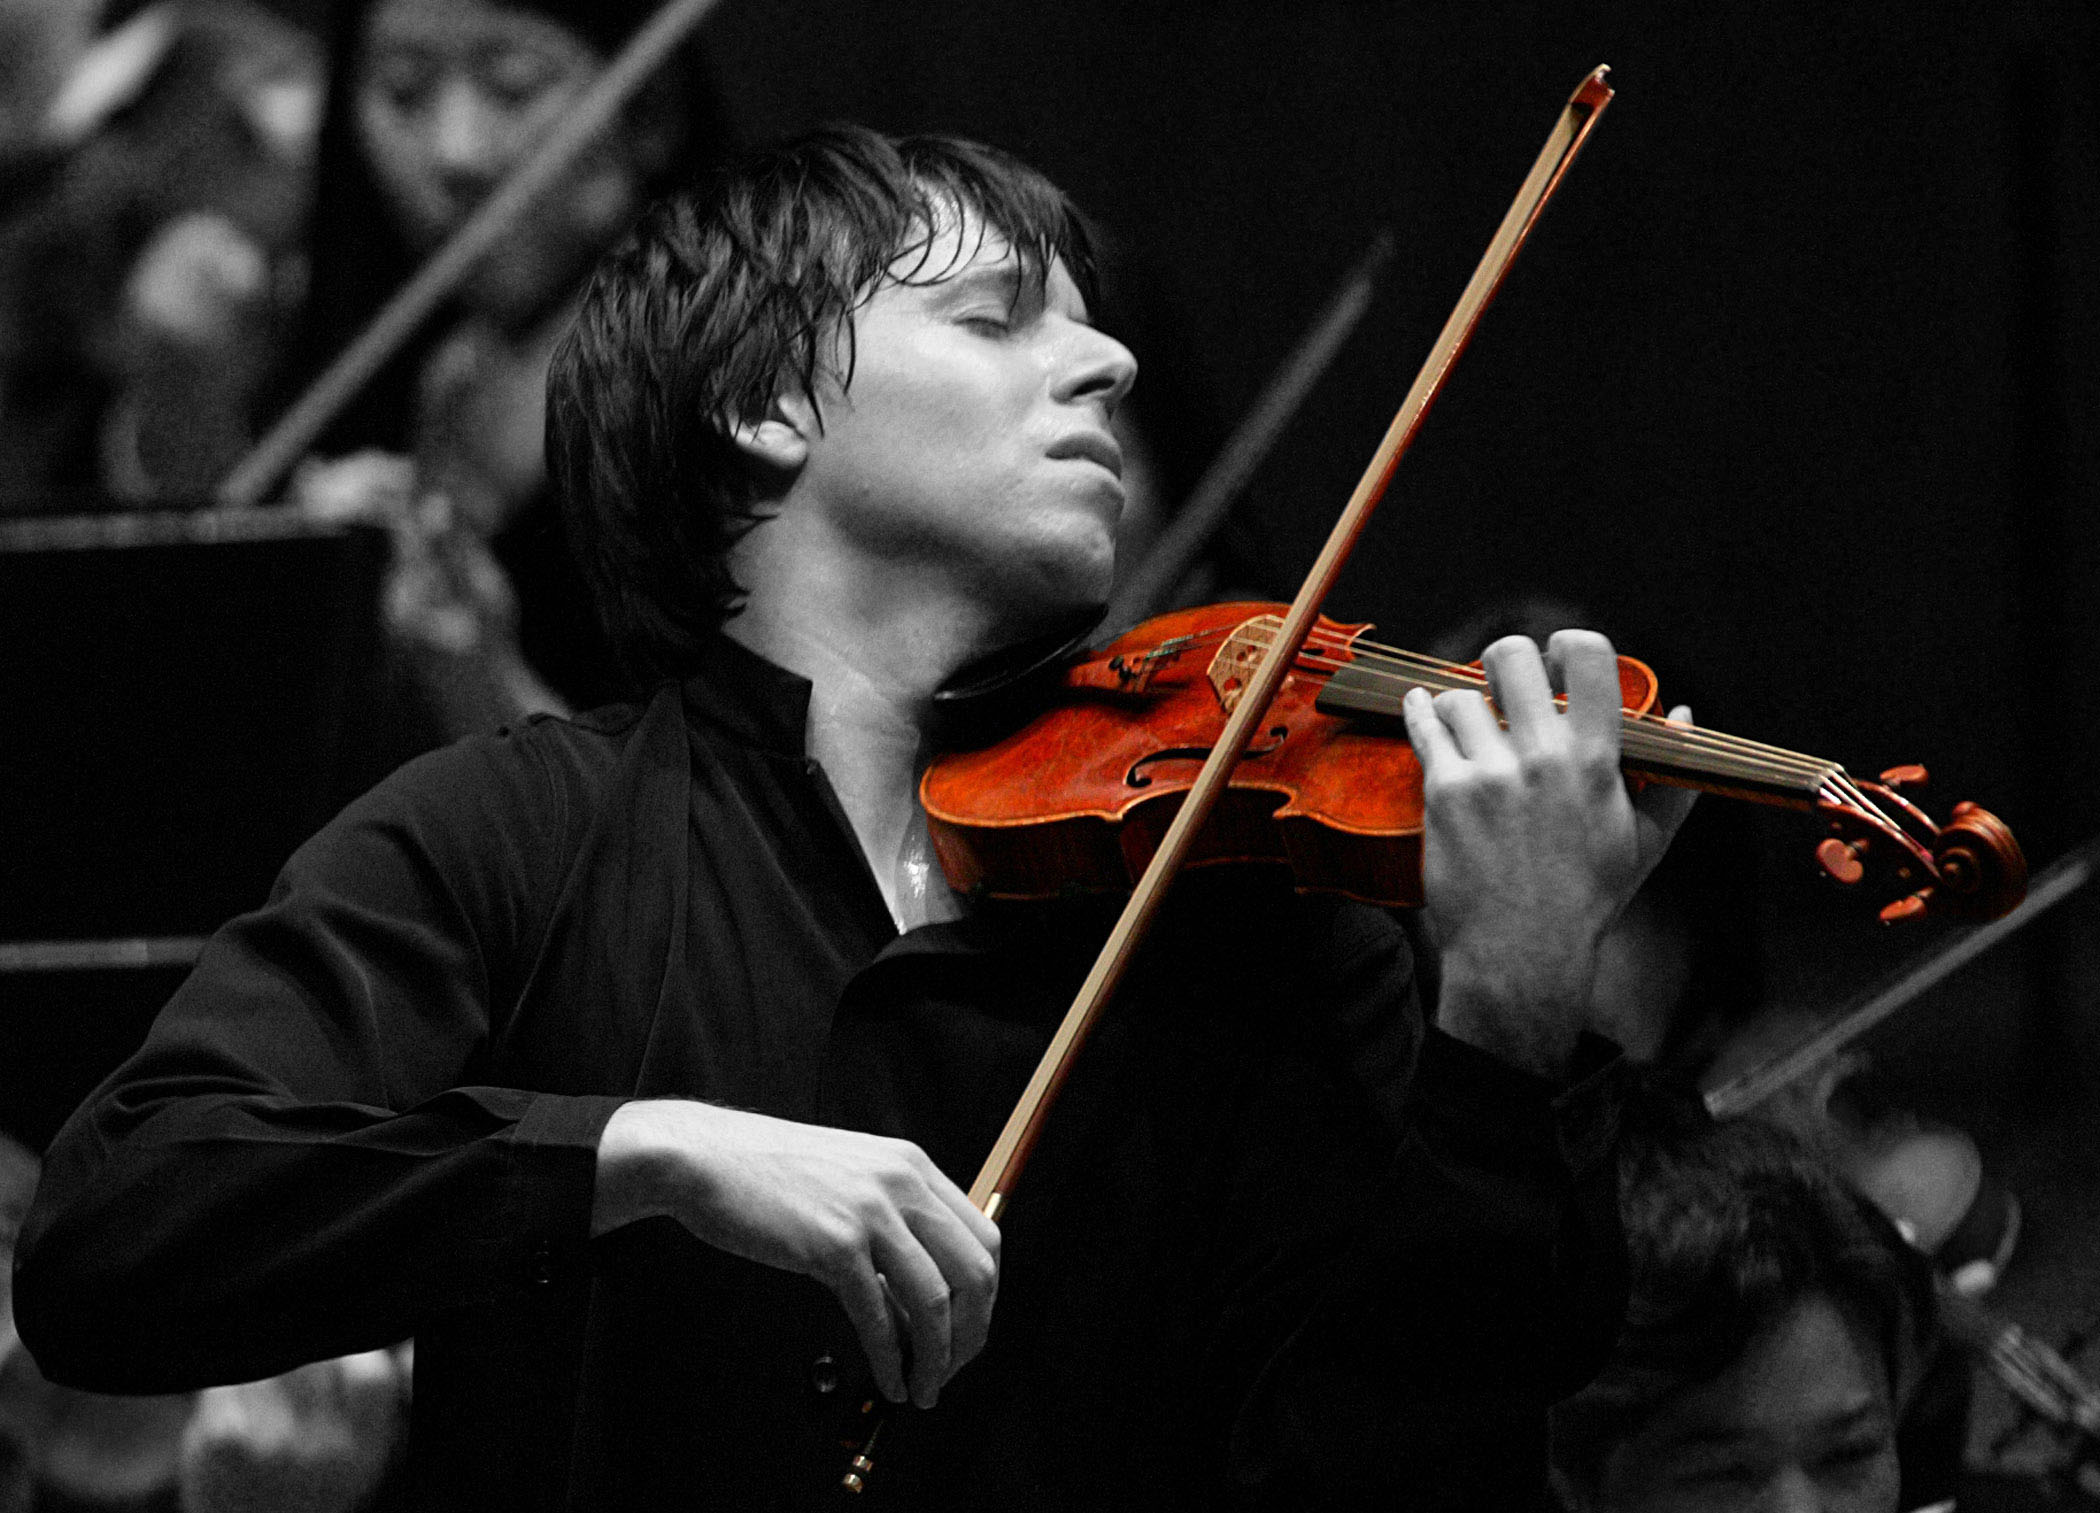 Joshua violin. Джошуа Белл. Музыкант Джошуа Белл. Скрипач-виртуоз Джошуа Белл. Джошуа Белл фото.